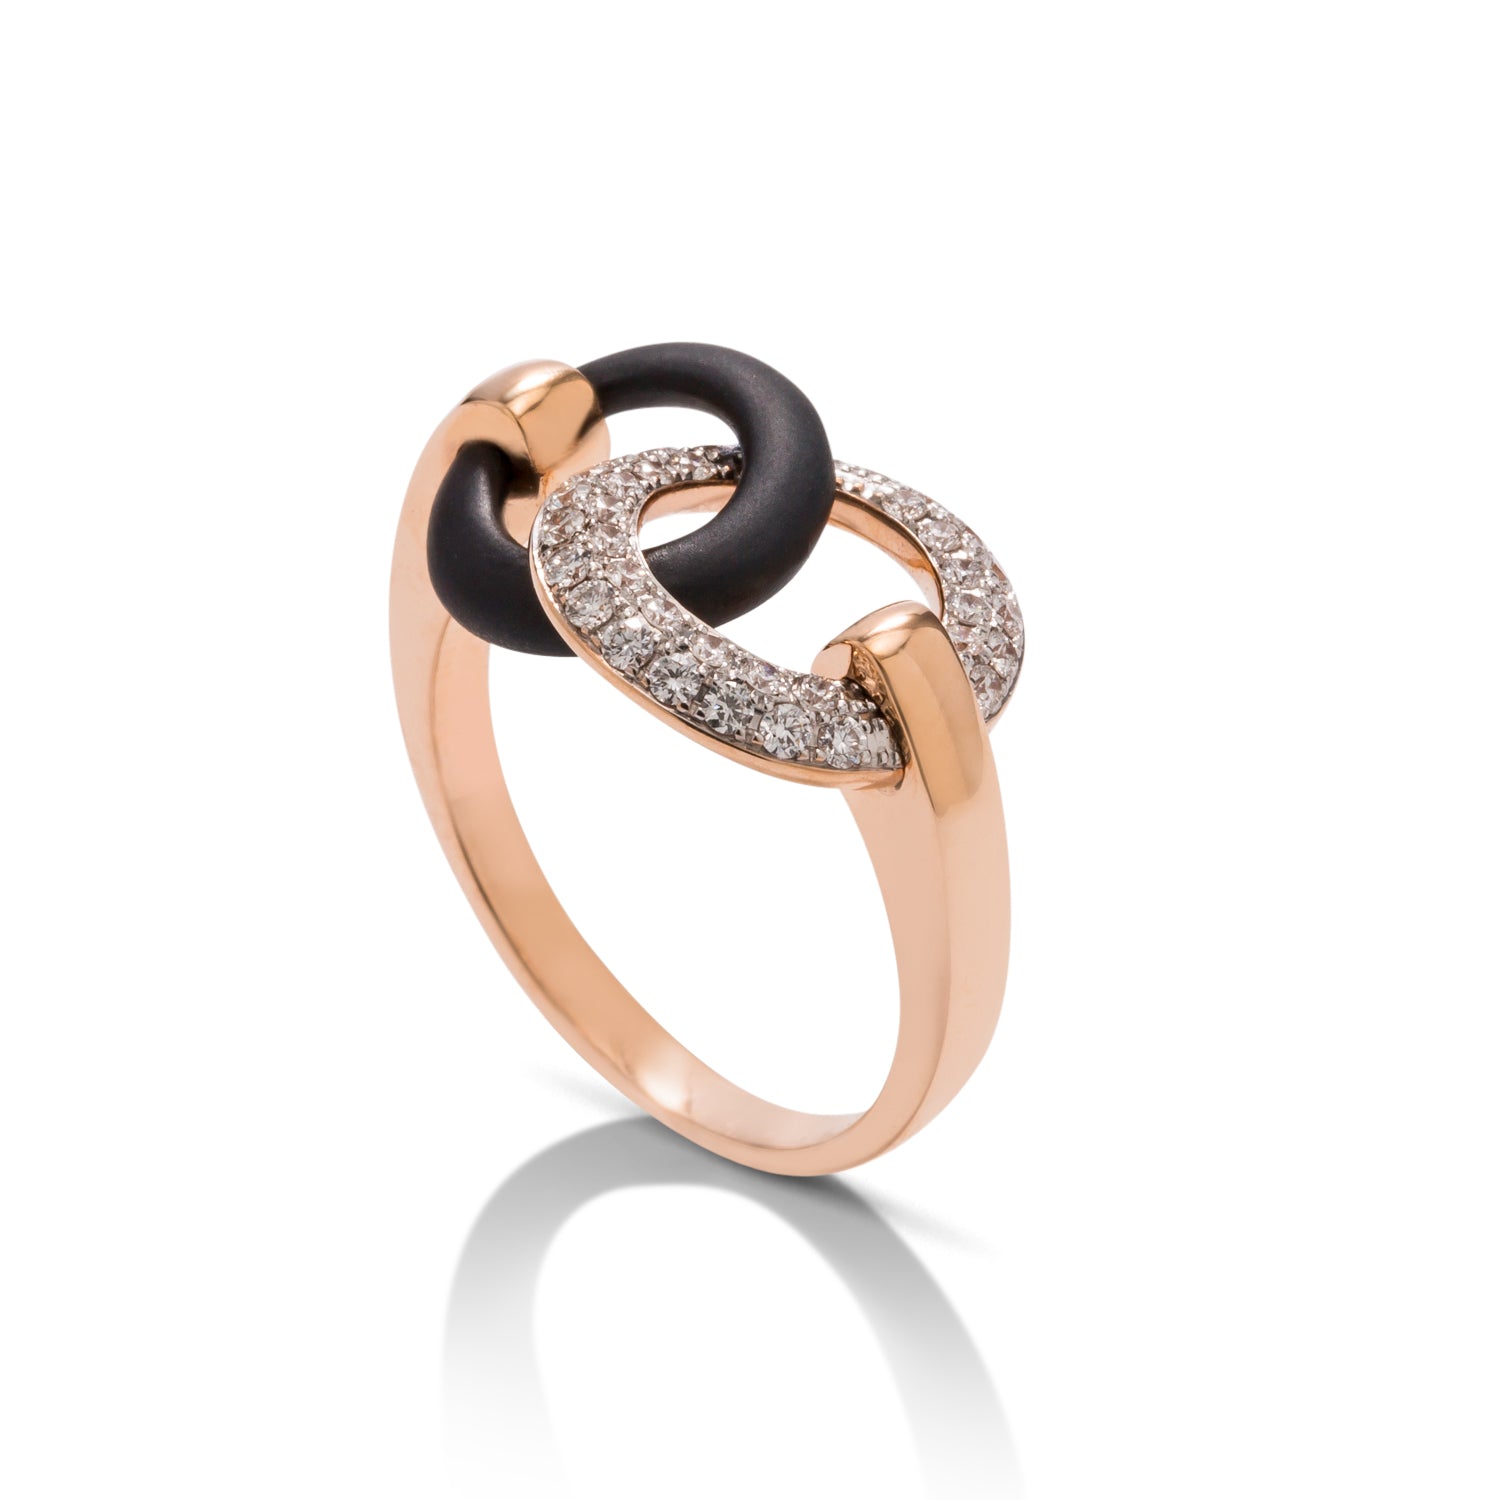 18k Rose Gold & Black Steel Diamond Ring - Charles Koll Jewellers